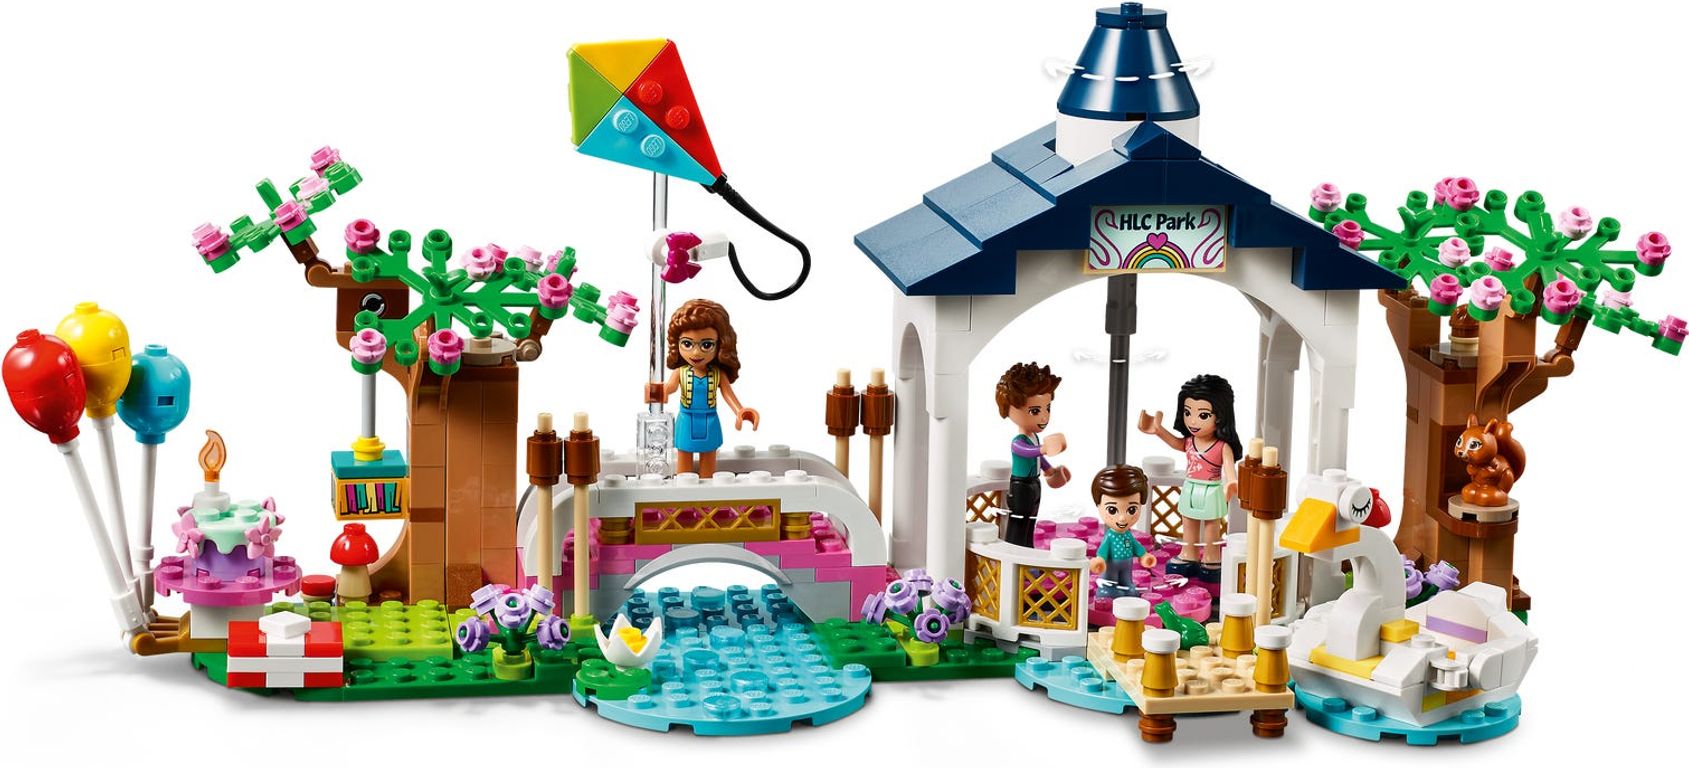 LEGO® Friends Heartlake City Park gameplay